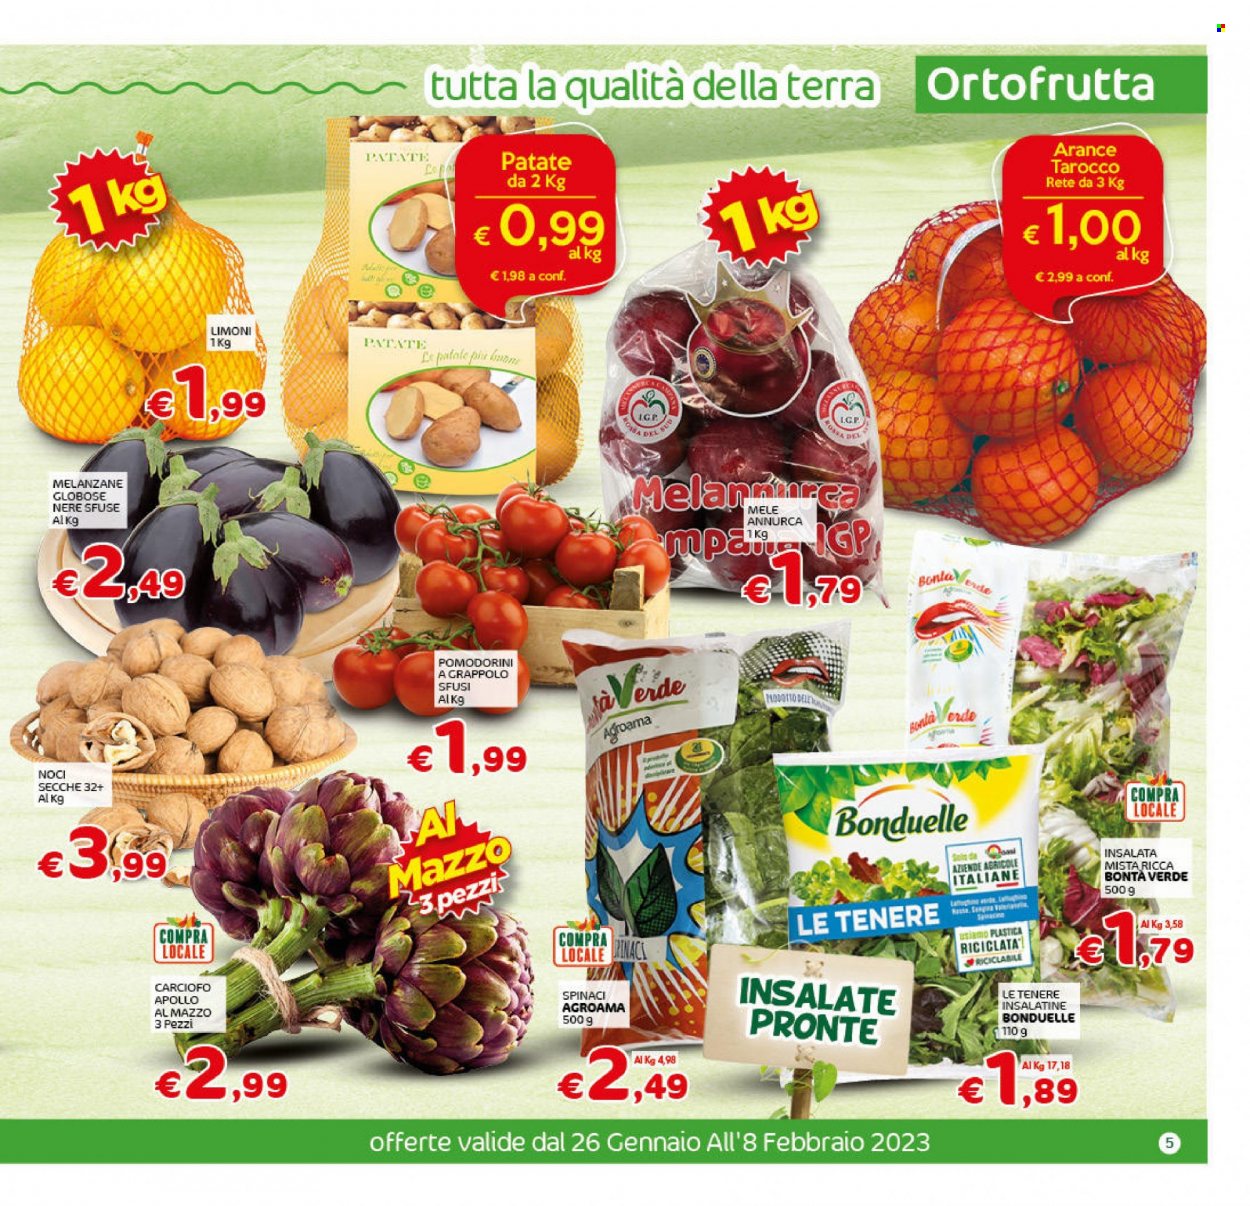 thumbnail - Volantino CRAI - 26/1/2023 - 8/2/2023 - Prodotti in offerta - insalata mista, melanzane, Bonduelle, spinaci, pomodorini, mele, limoni, arance, noci. Pagina 5.